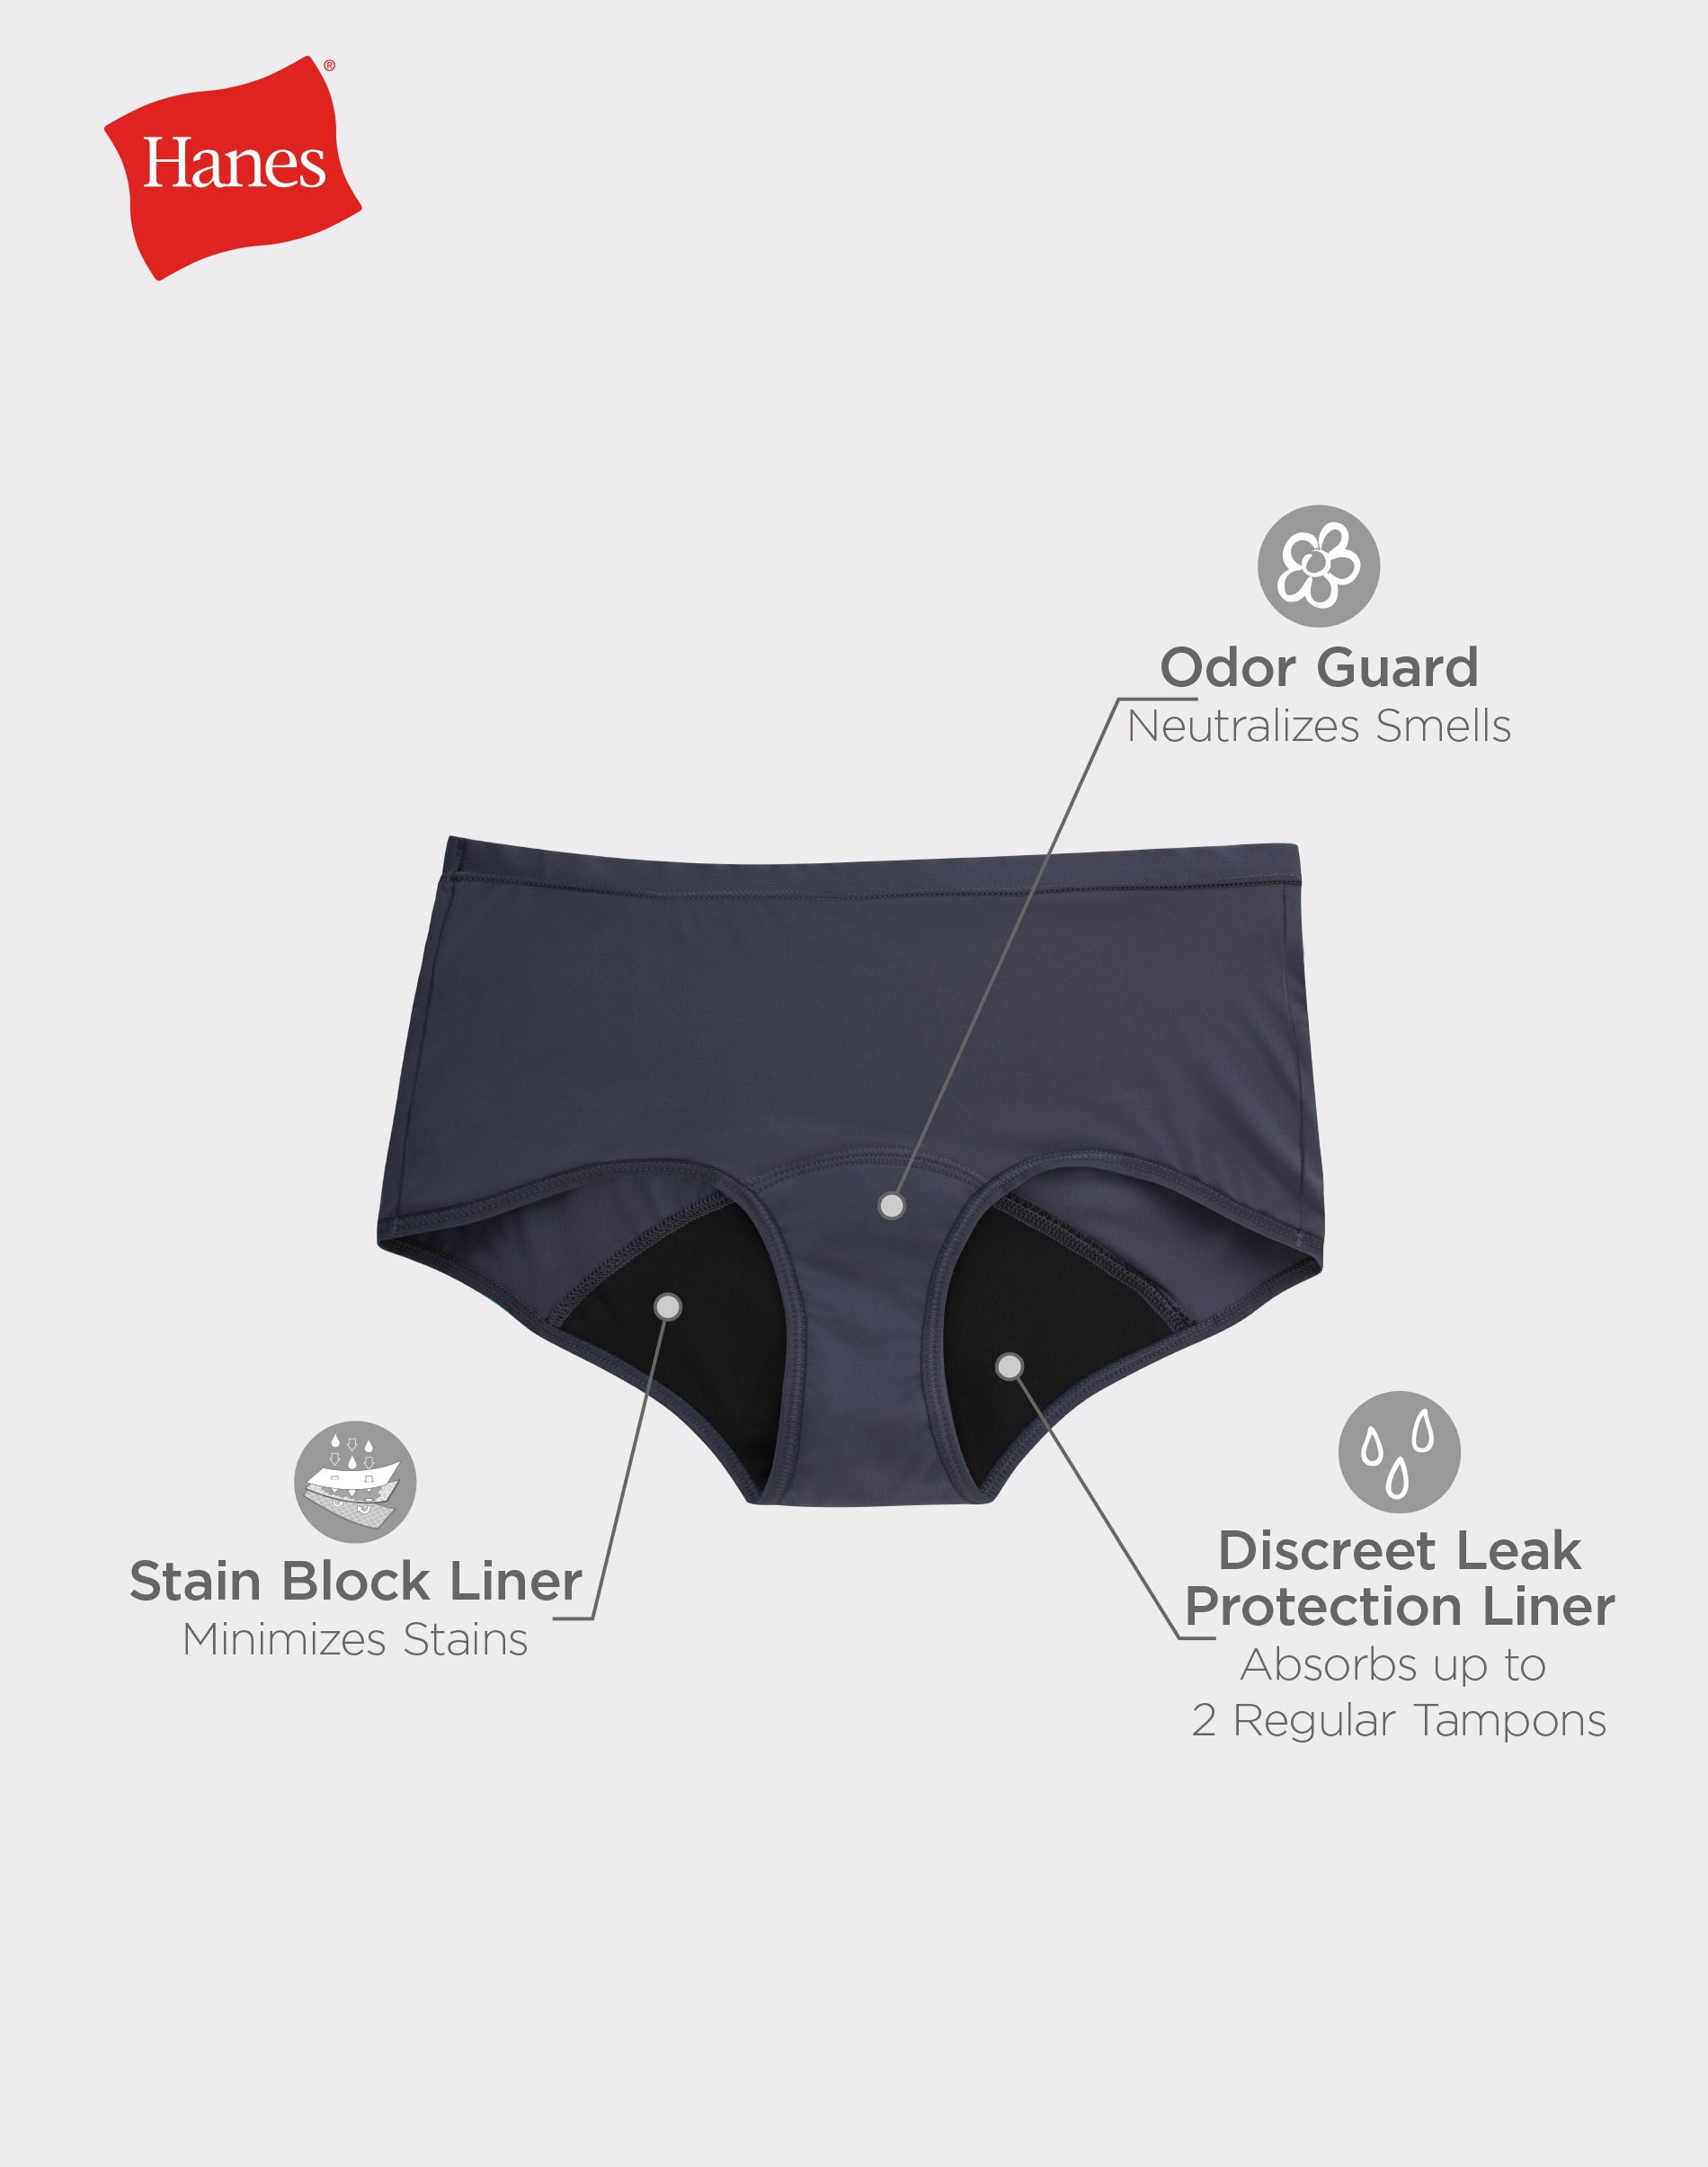 Hanes Women's Comfort, Period. Boy Shorts Panties, Postpartum and